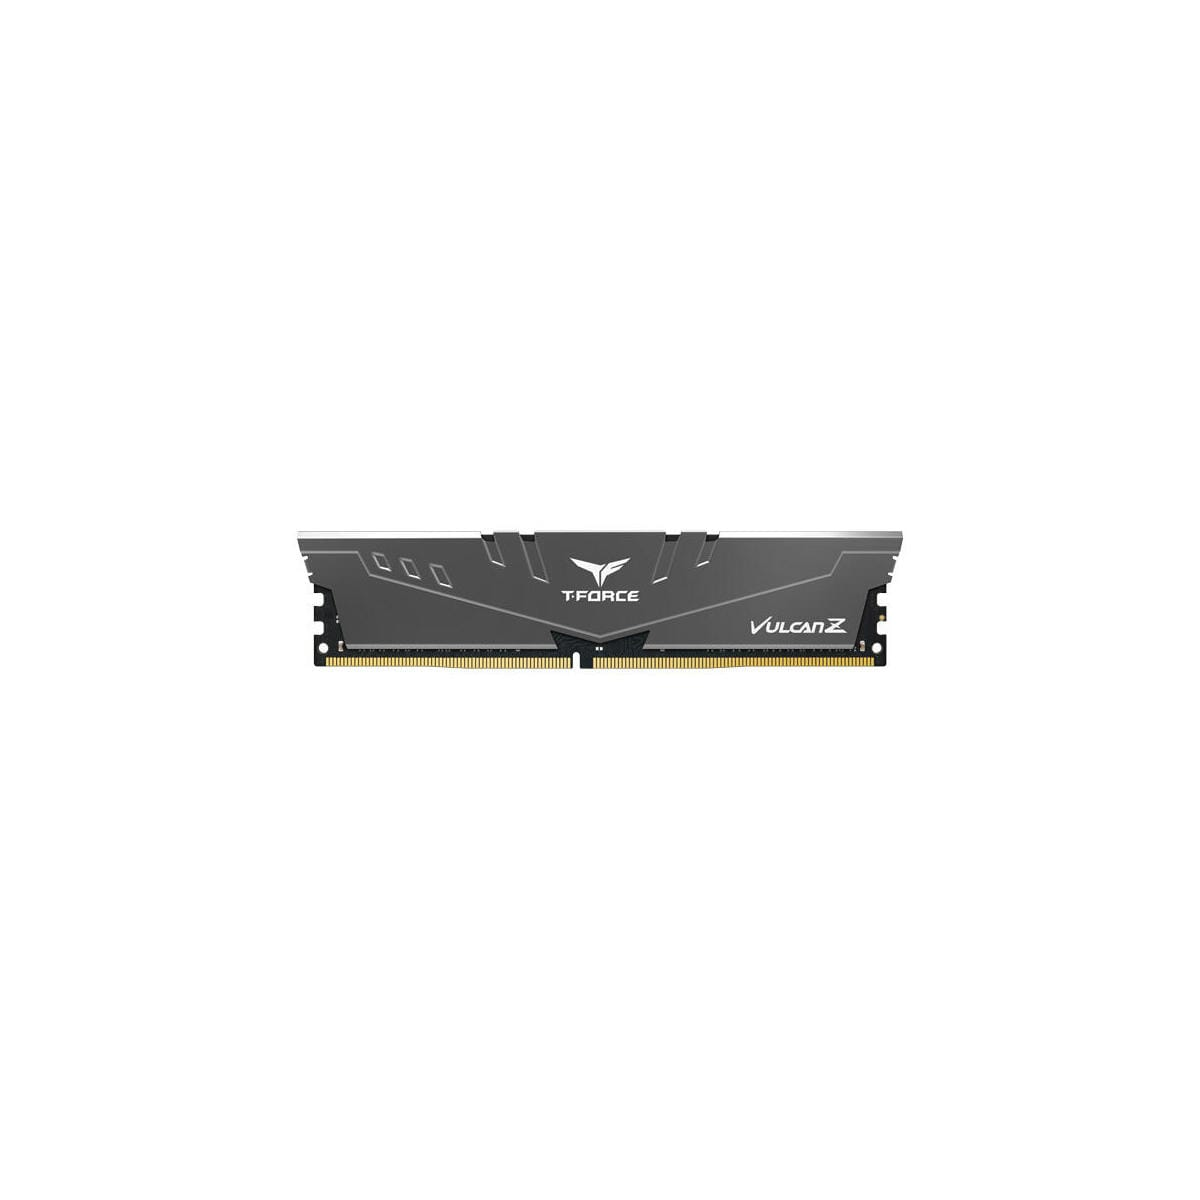 OTROS 2x16GB, 1.35V, Vulcan Z DDR4 series, GB Speicher-Kit grey 32